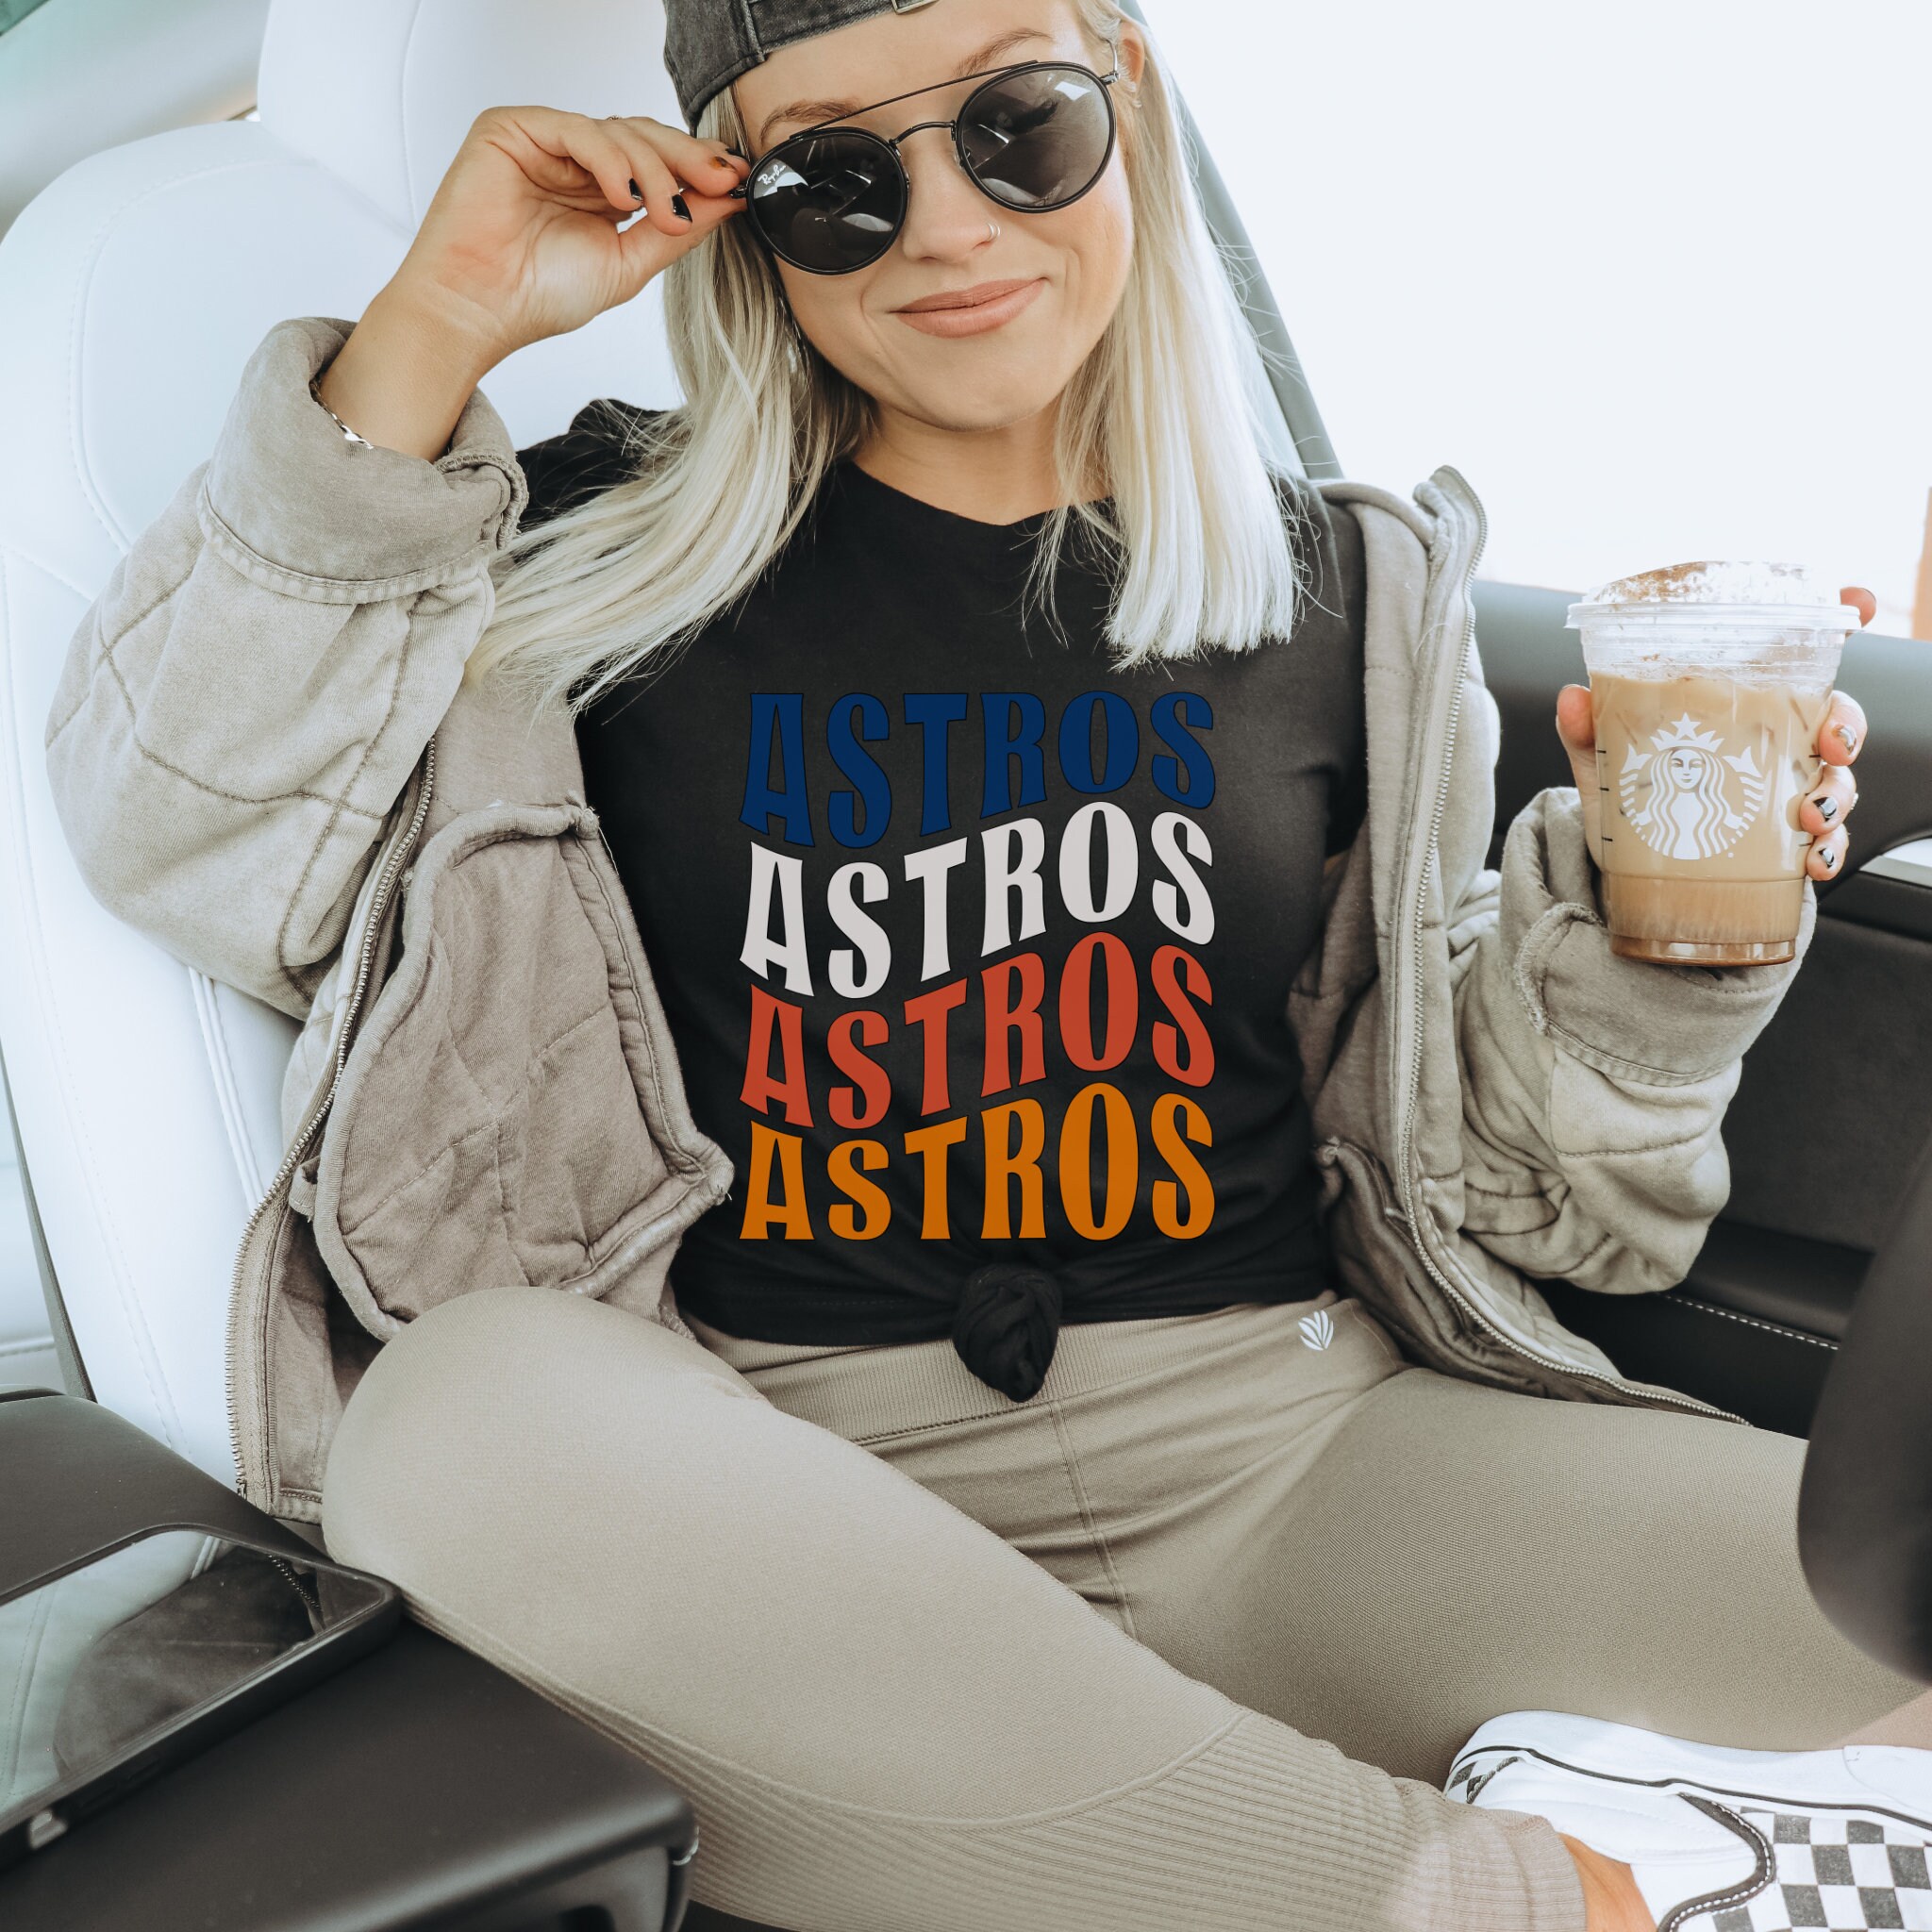 JasperAndSoph Comfort Colors Astros Shirt, Astros, Retro Astros Tshirt, Baseball Shirt, Vintage Astros Shirt, Houston Texas, Oversized Astros Shirt